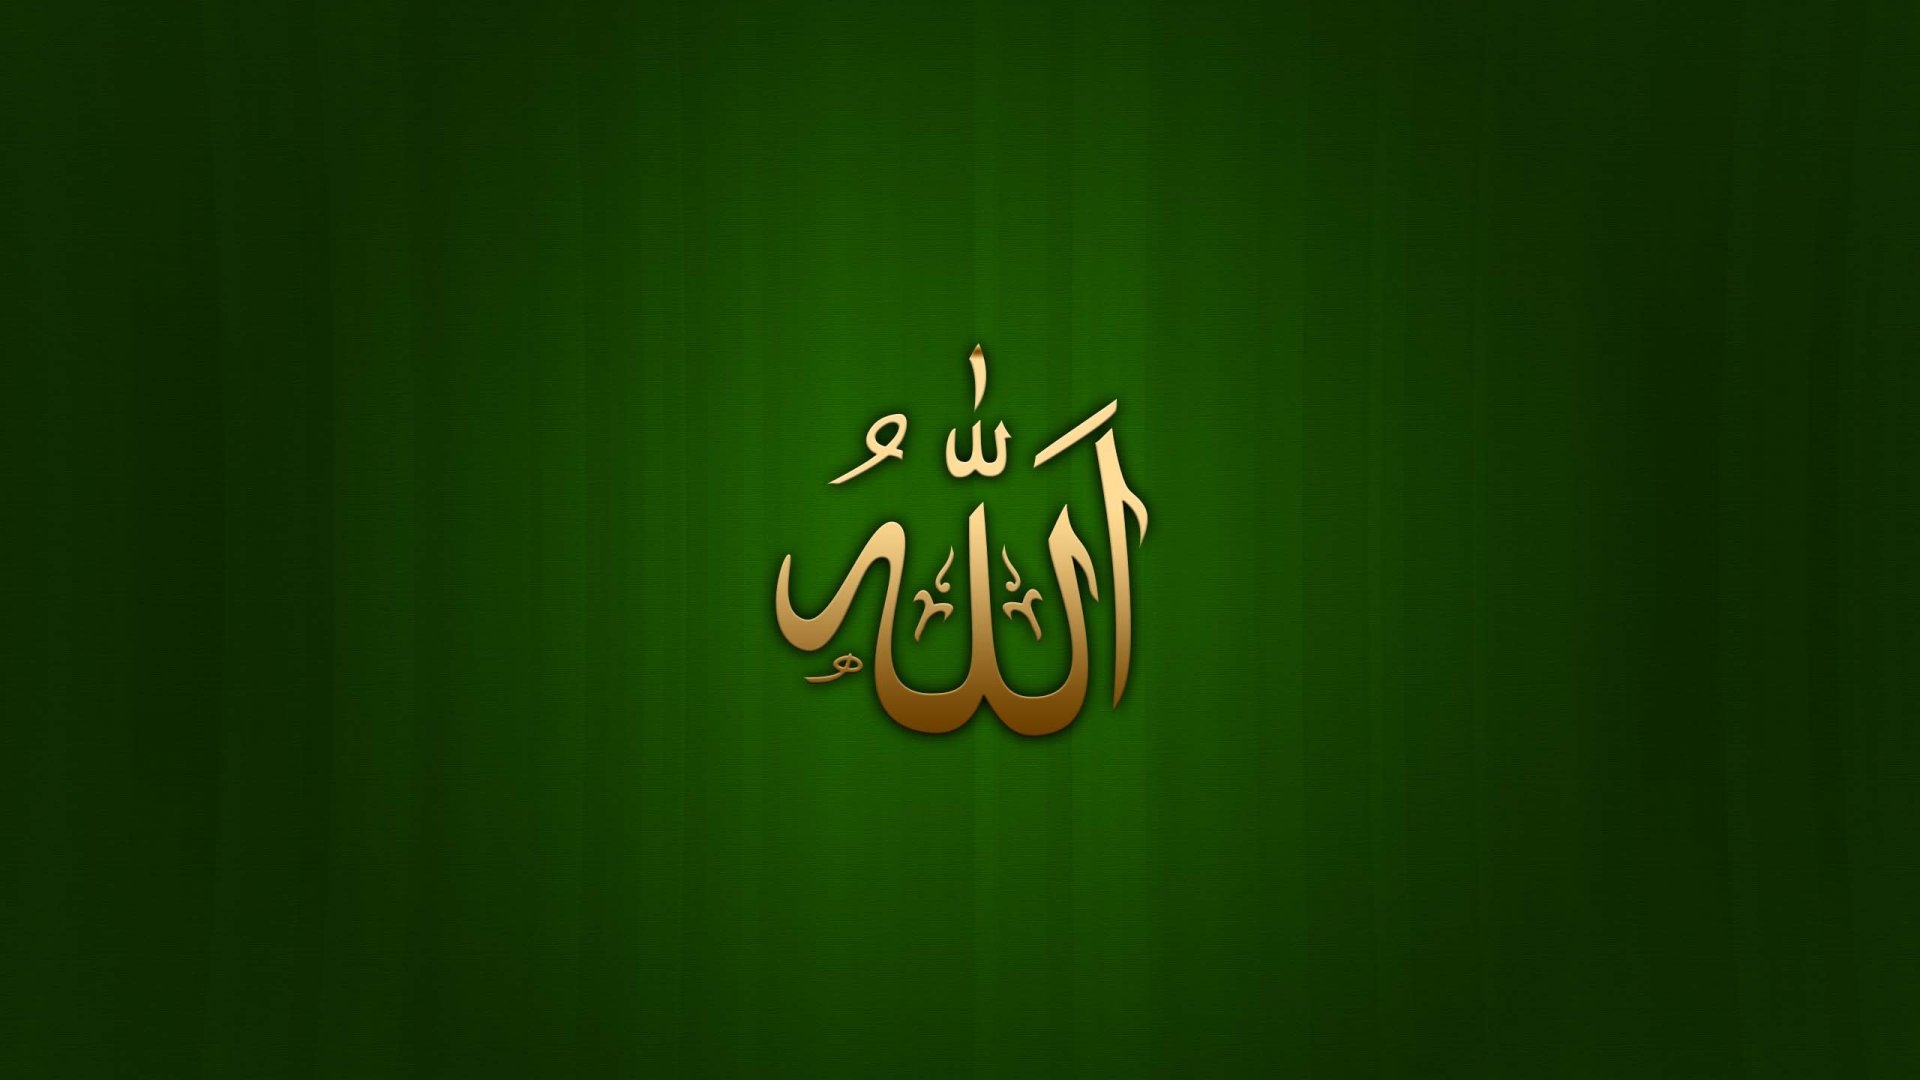 Masha Allah - Green Background